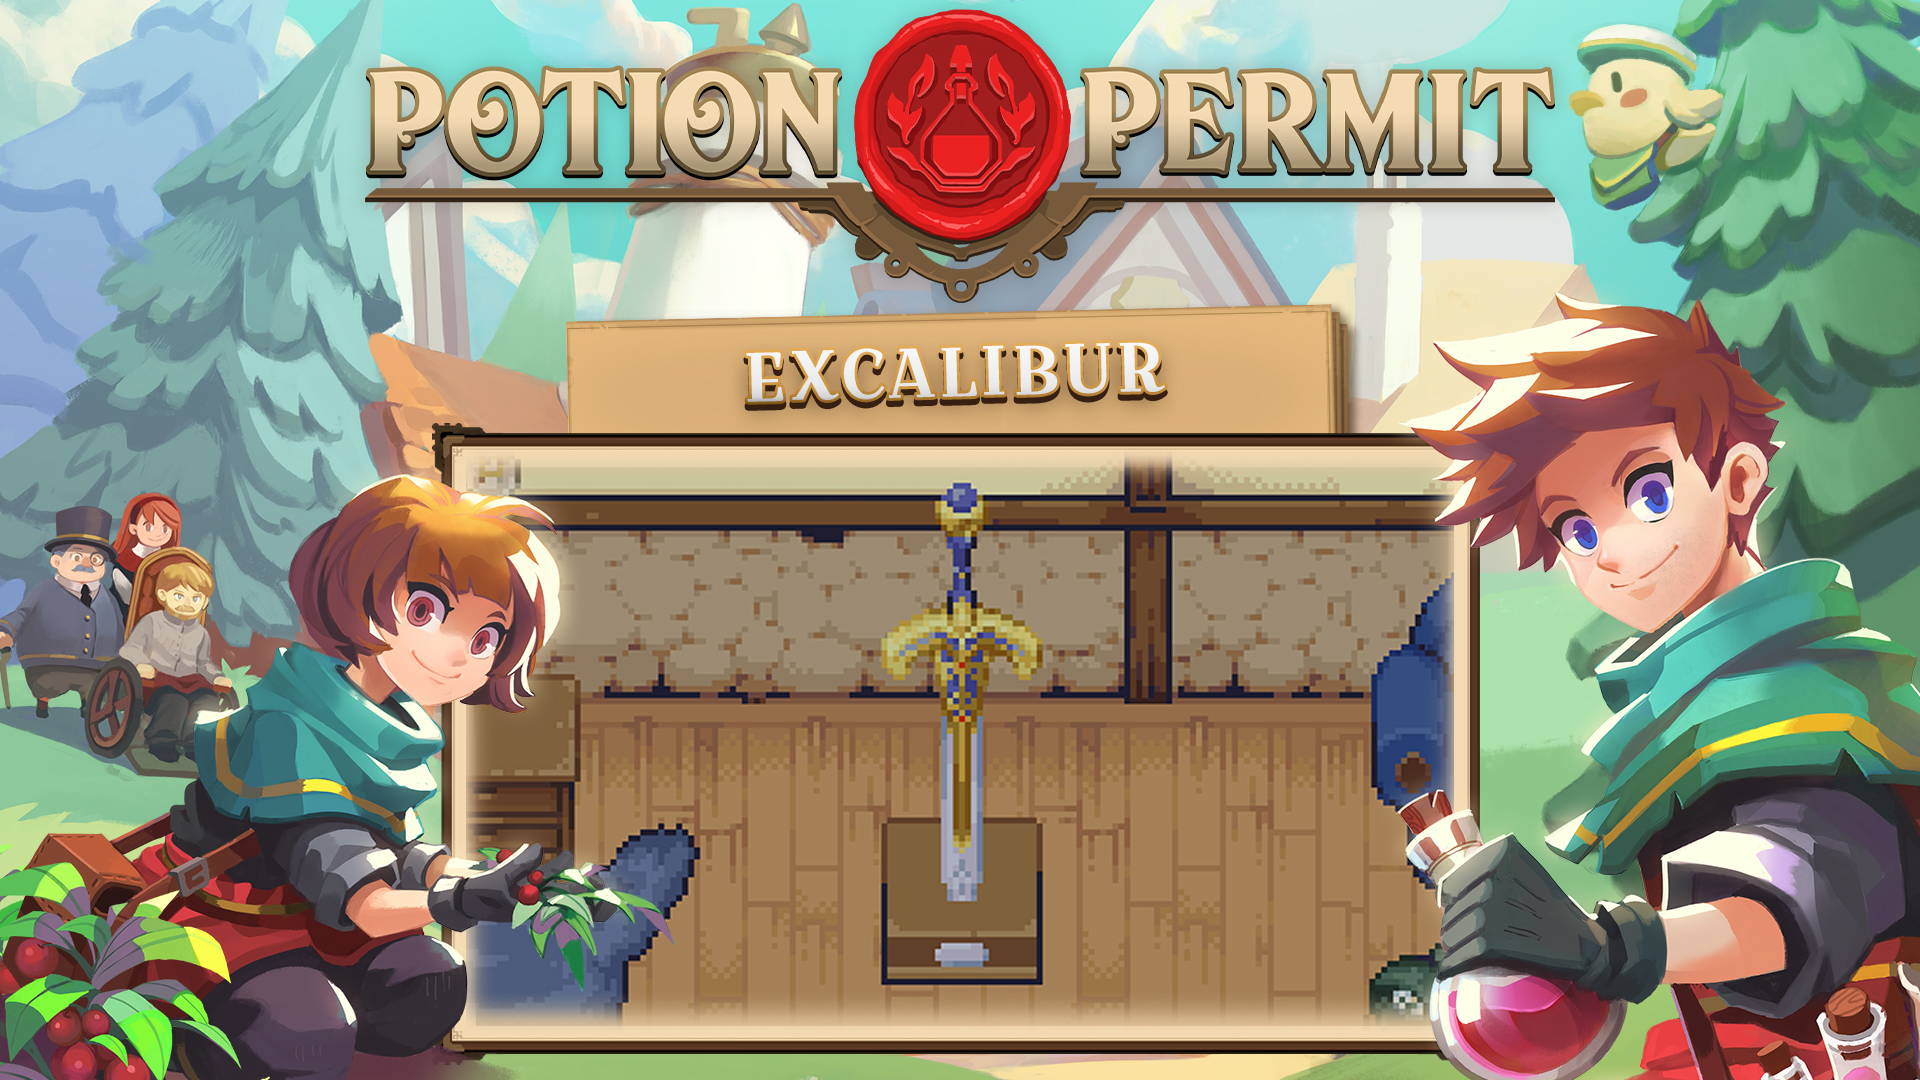 Potion Permit - Excalibur